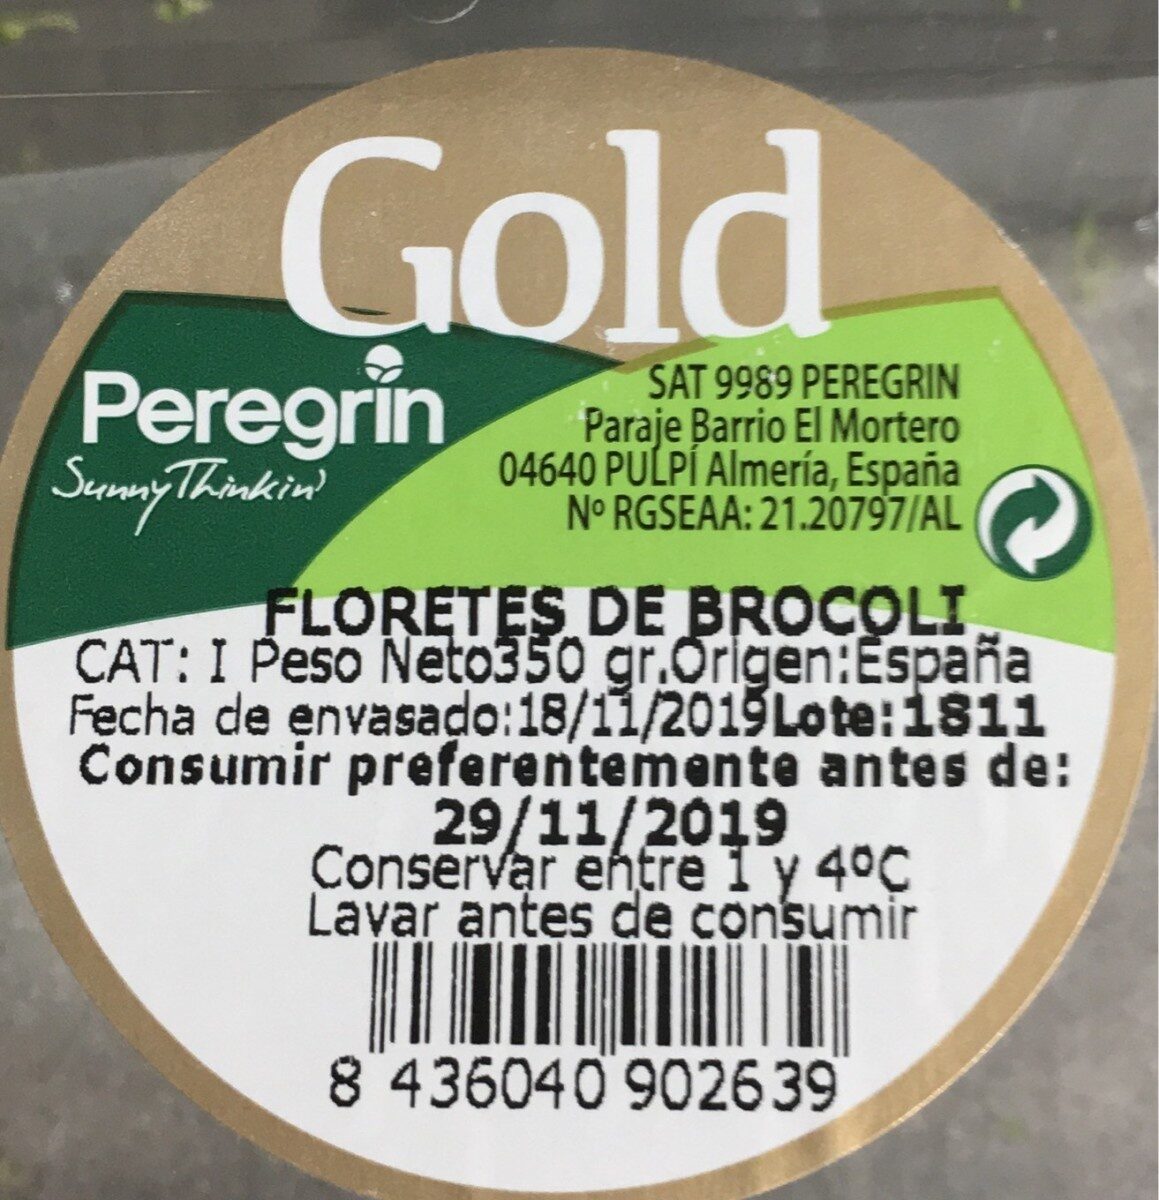 Floretes de brocoli - Product - es